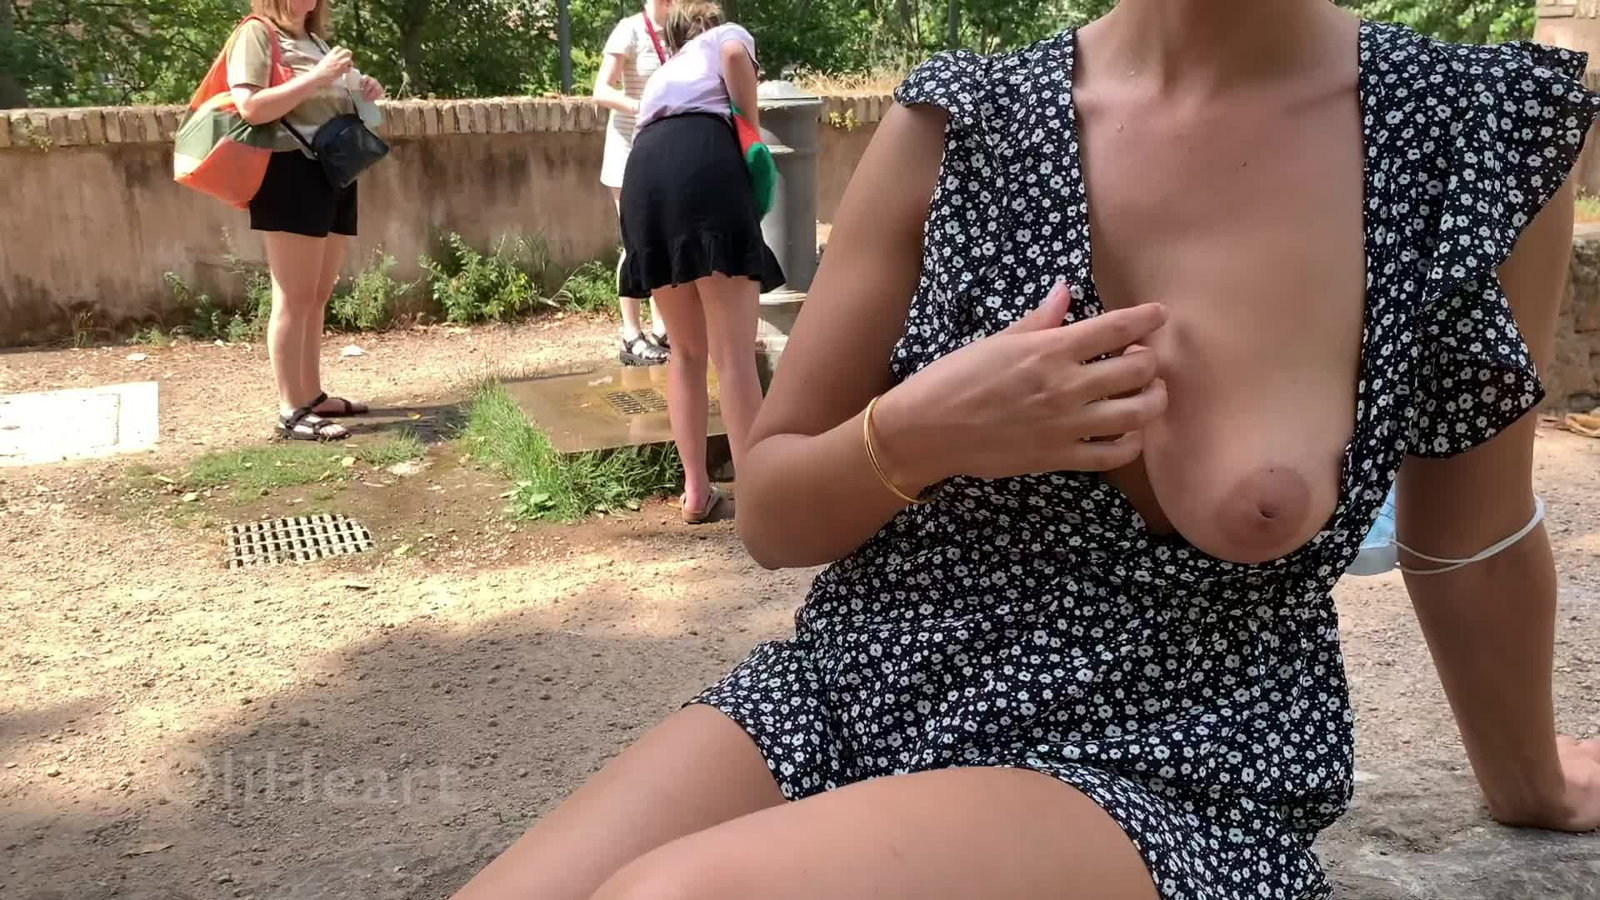 Video post by Mother.Brandi9